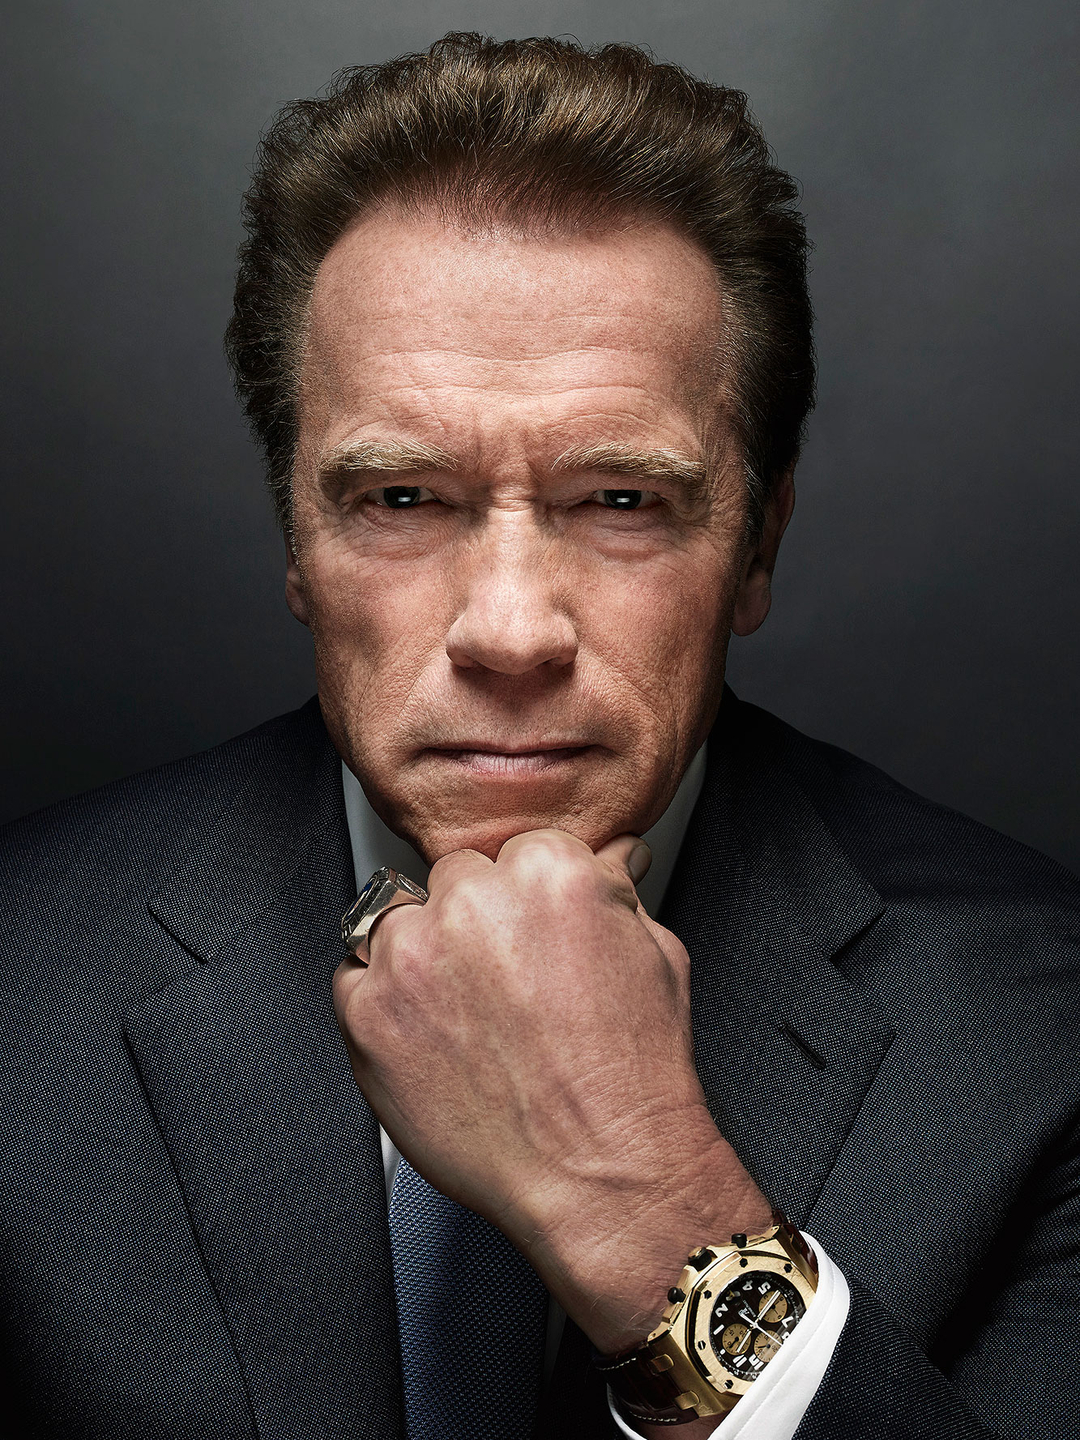 Arnold Schwarzenegger story of success